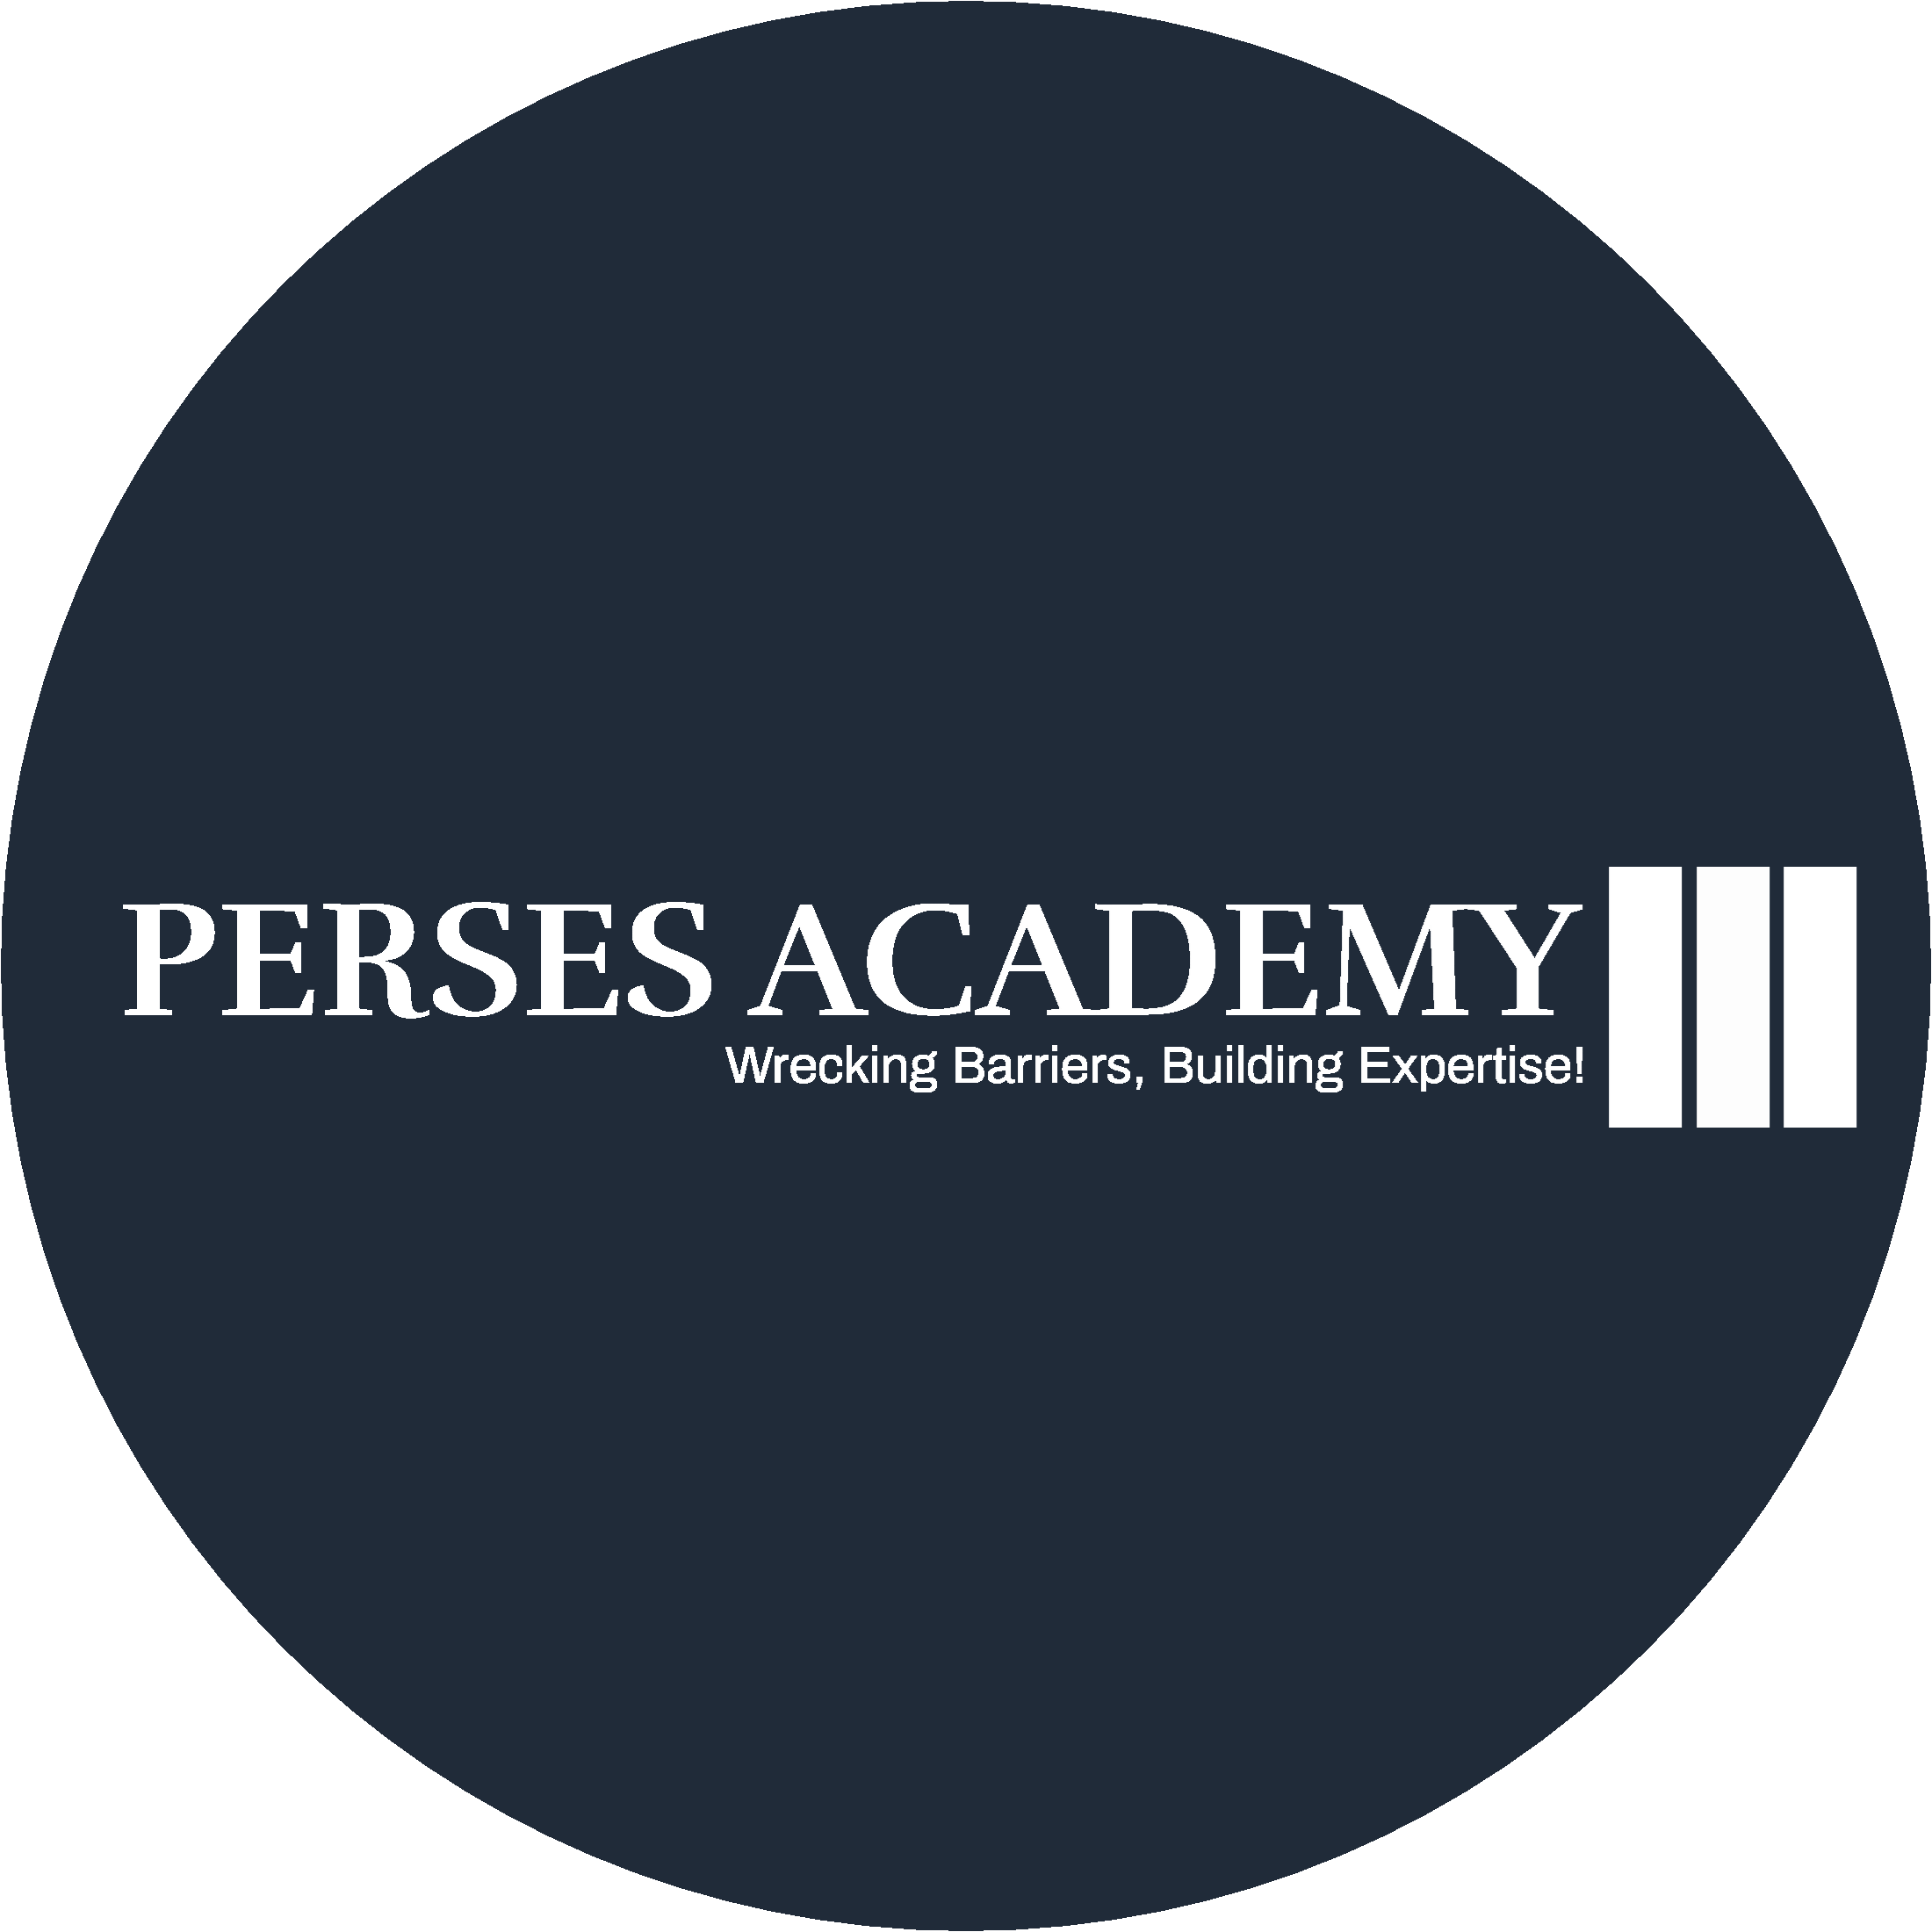 PERSES Academy